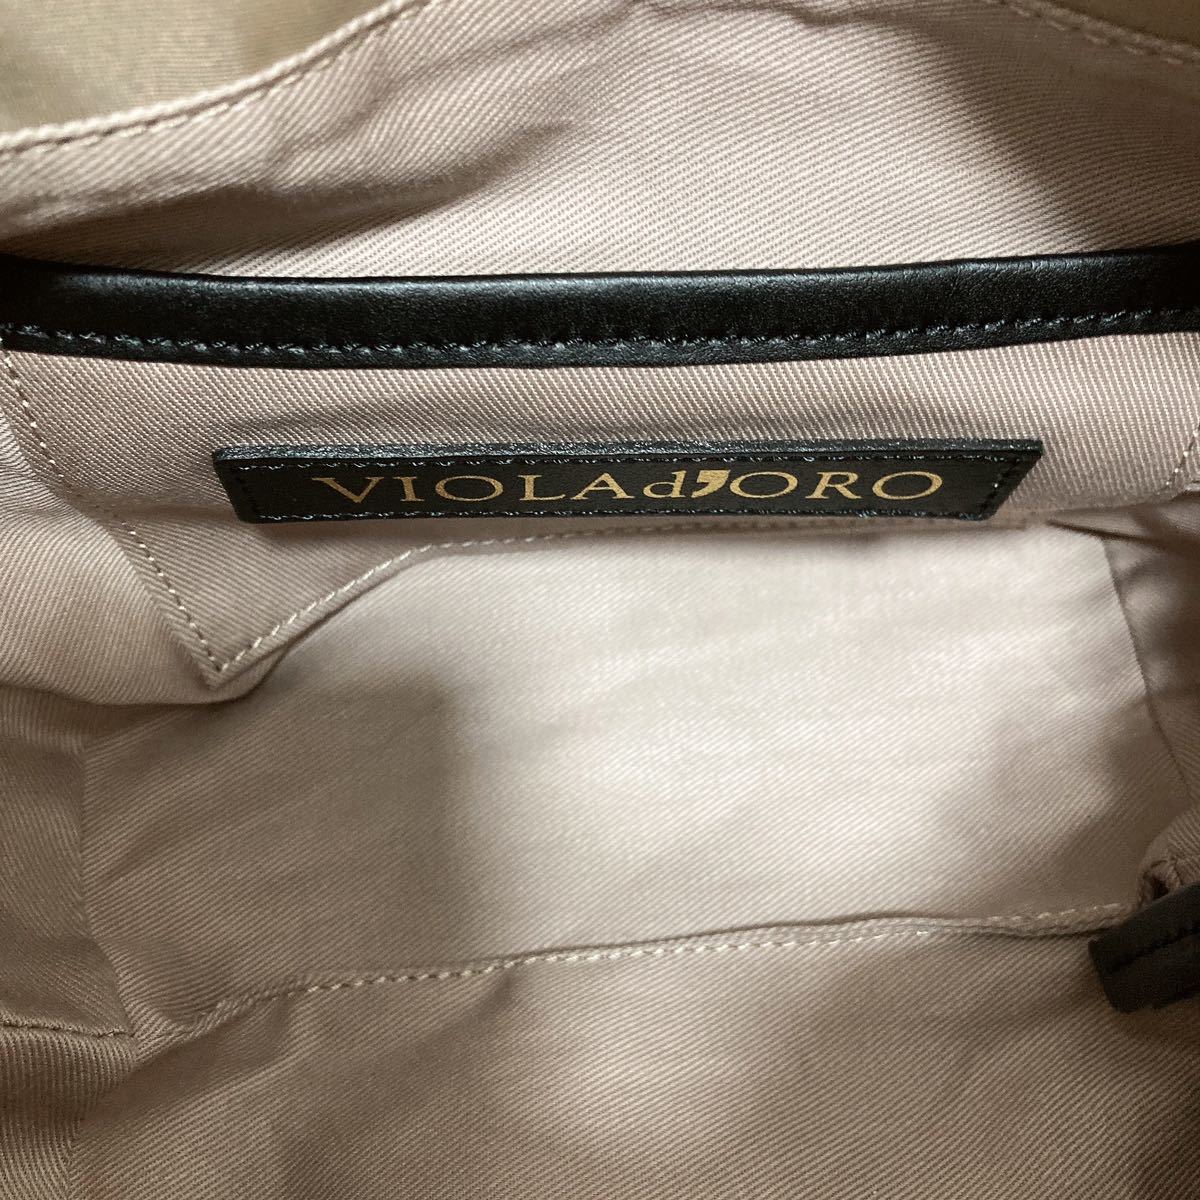  new goods storage goods VIOLAd\'ORO vi o Rado roBIANCA lady's 2way shoulder bag handbag beige nylon cow leather leather brand 